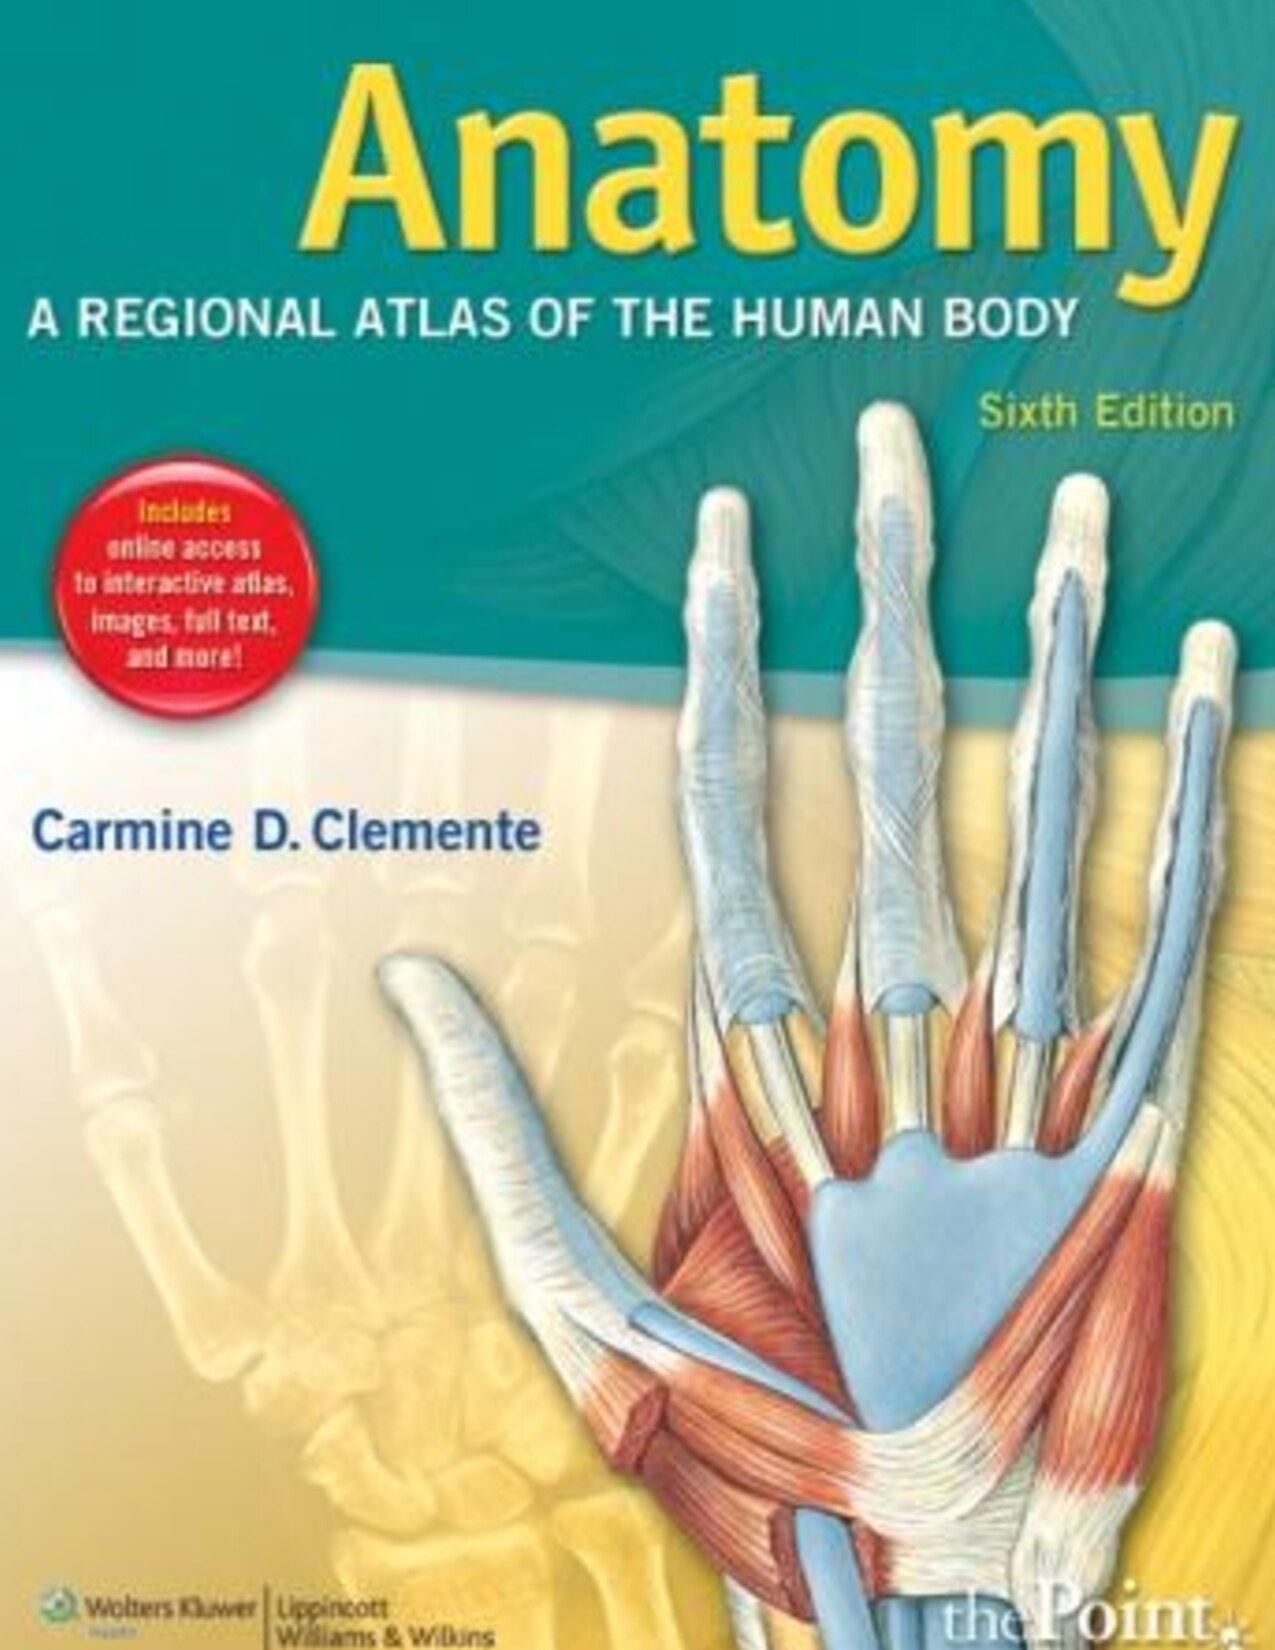 Anatomy A Regional Atlas of the Human Body, Sixth Edition